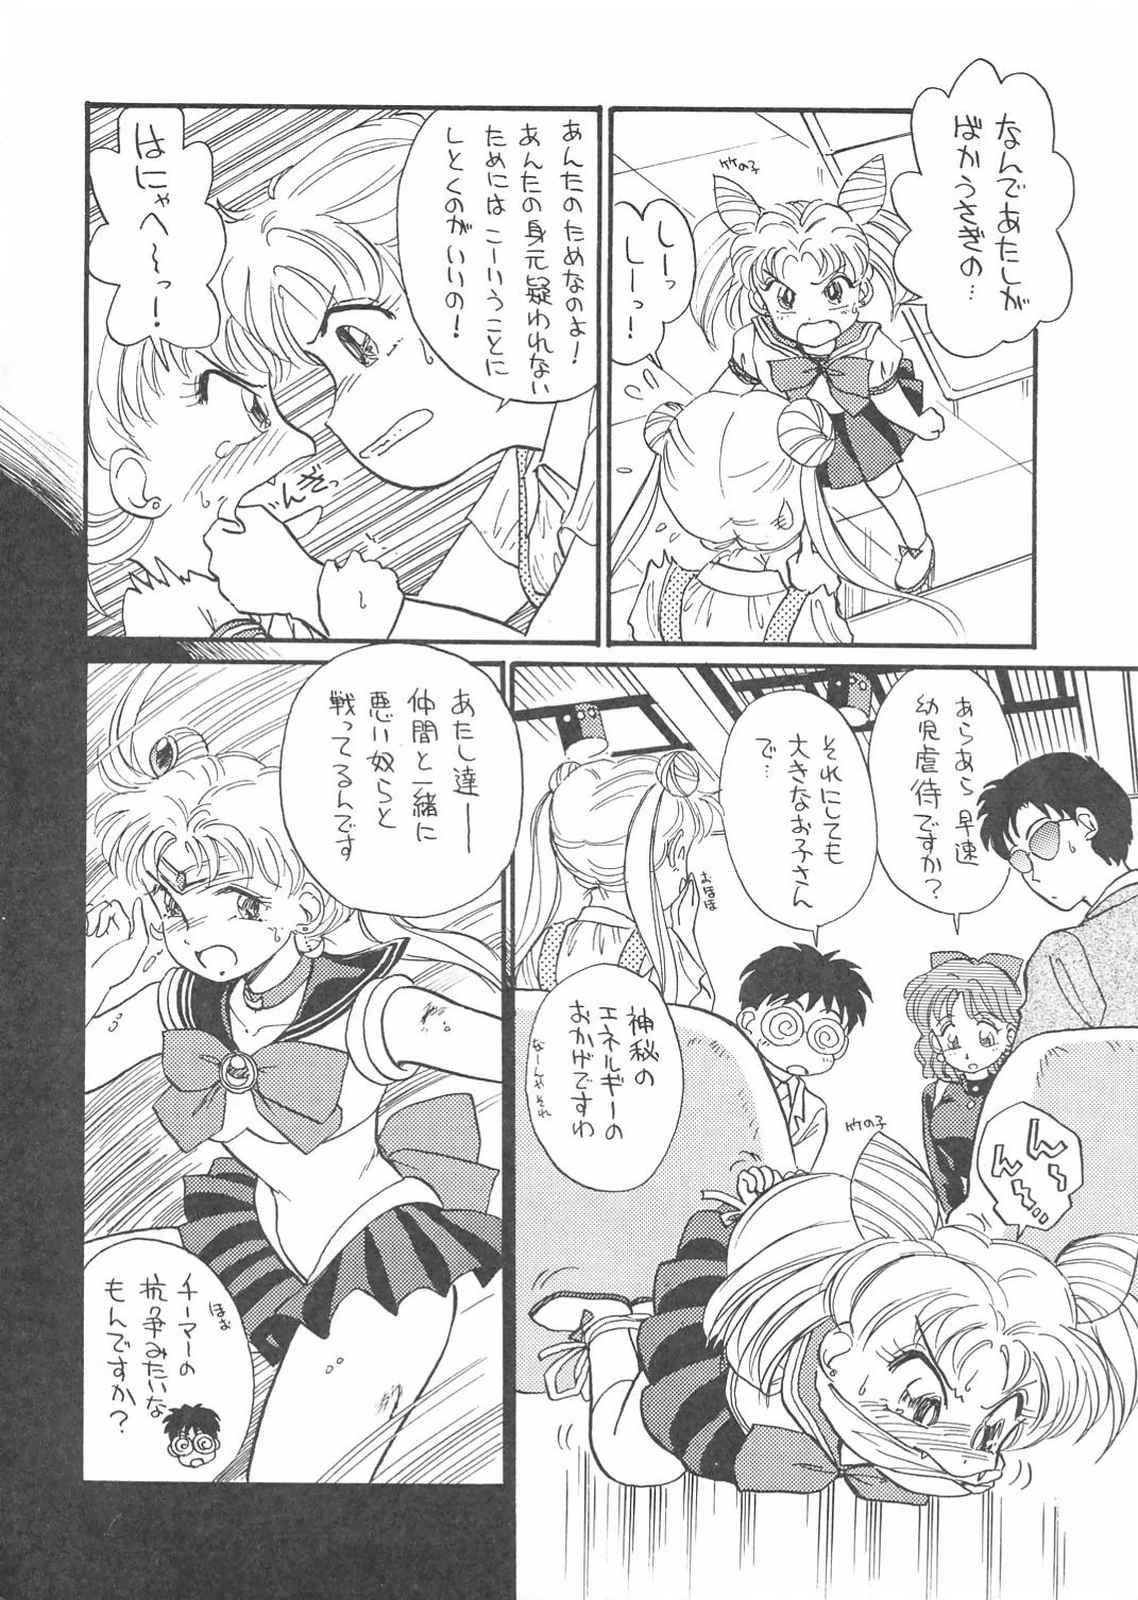 Pinoy Gekkou 3 - Sailor moon Culote - Page 8